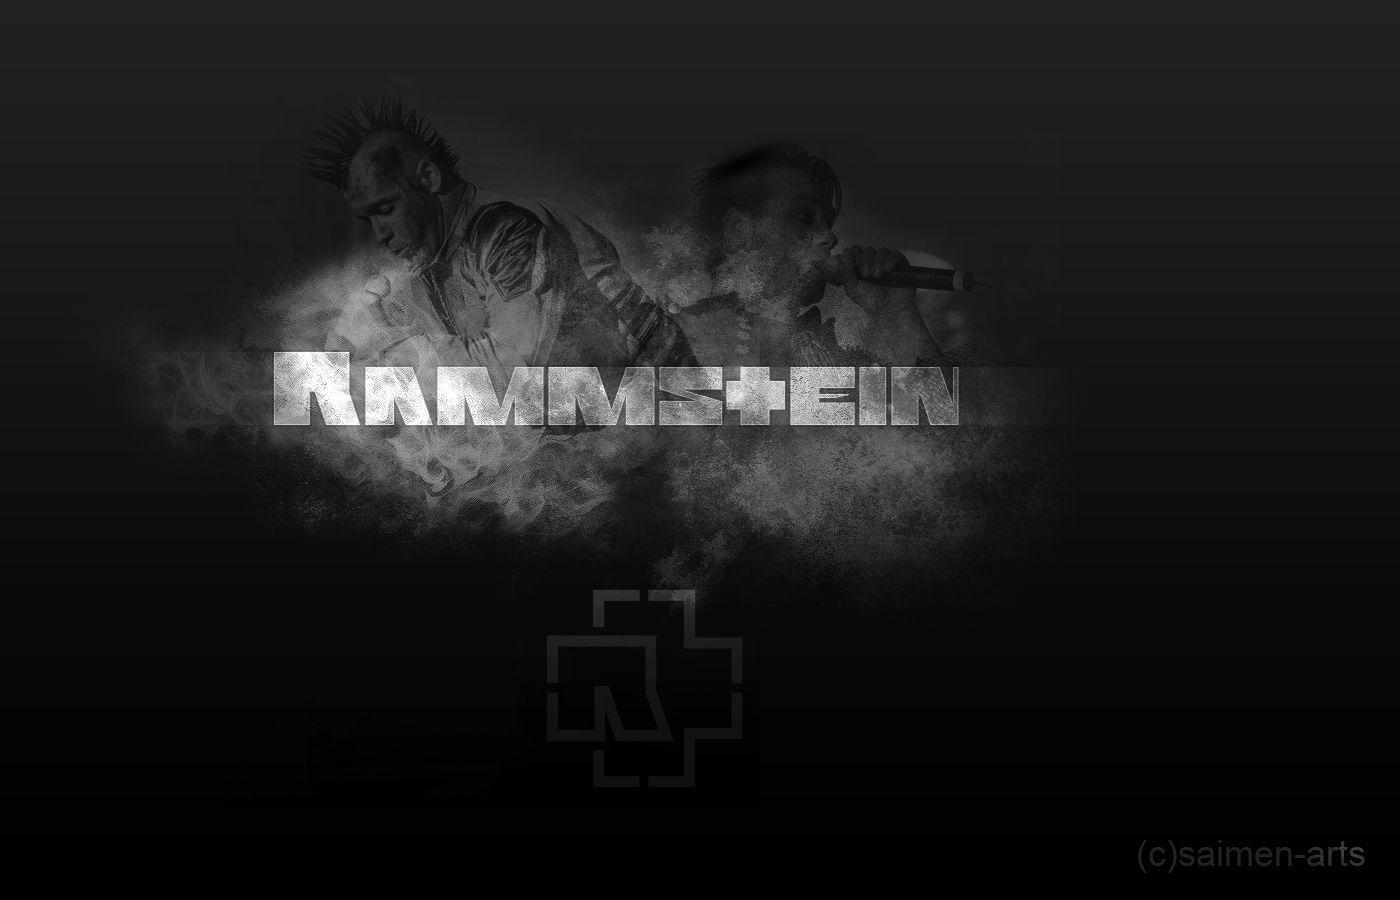 Resultado de imagen para rammstein logo wallpaper. postres